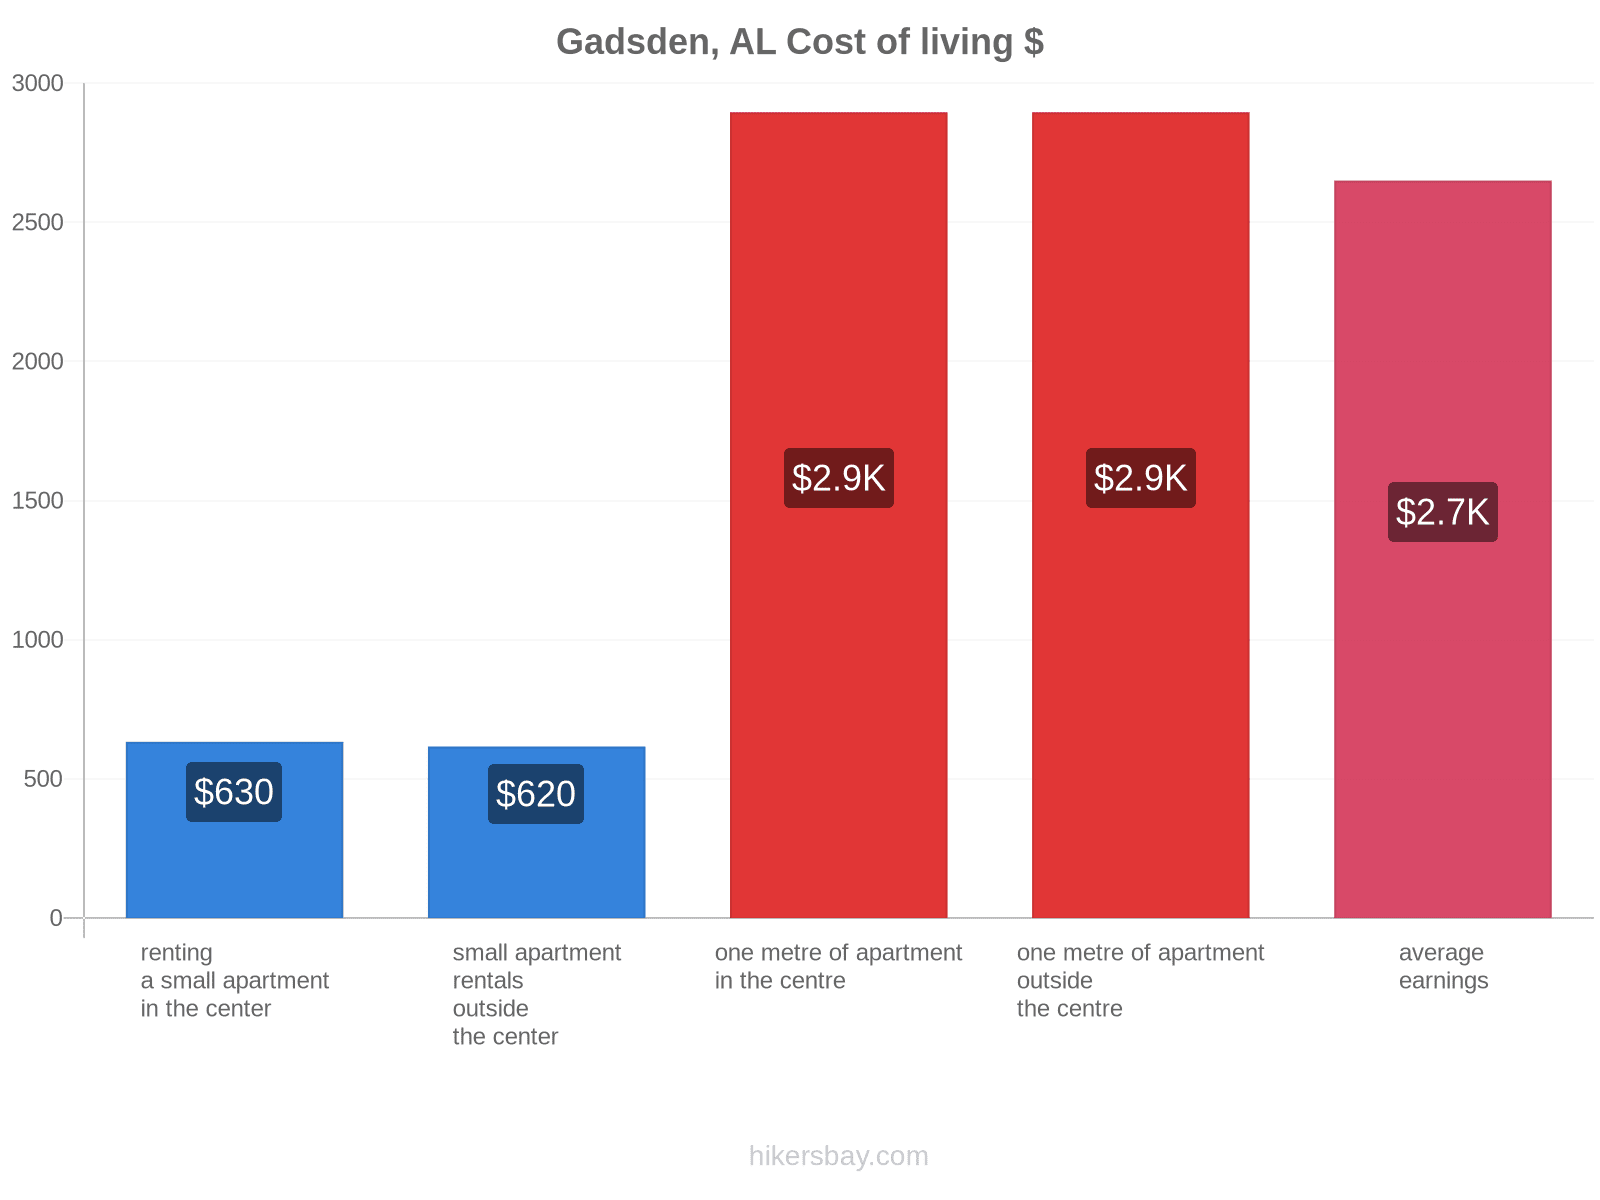 Gadsden, AL cost of living hikersbay.com